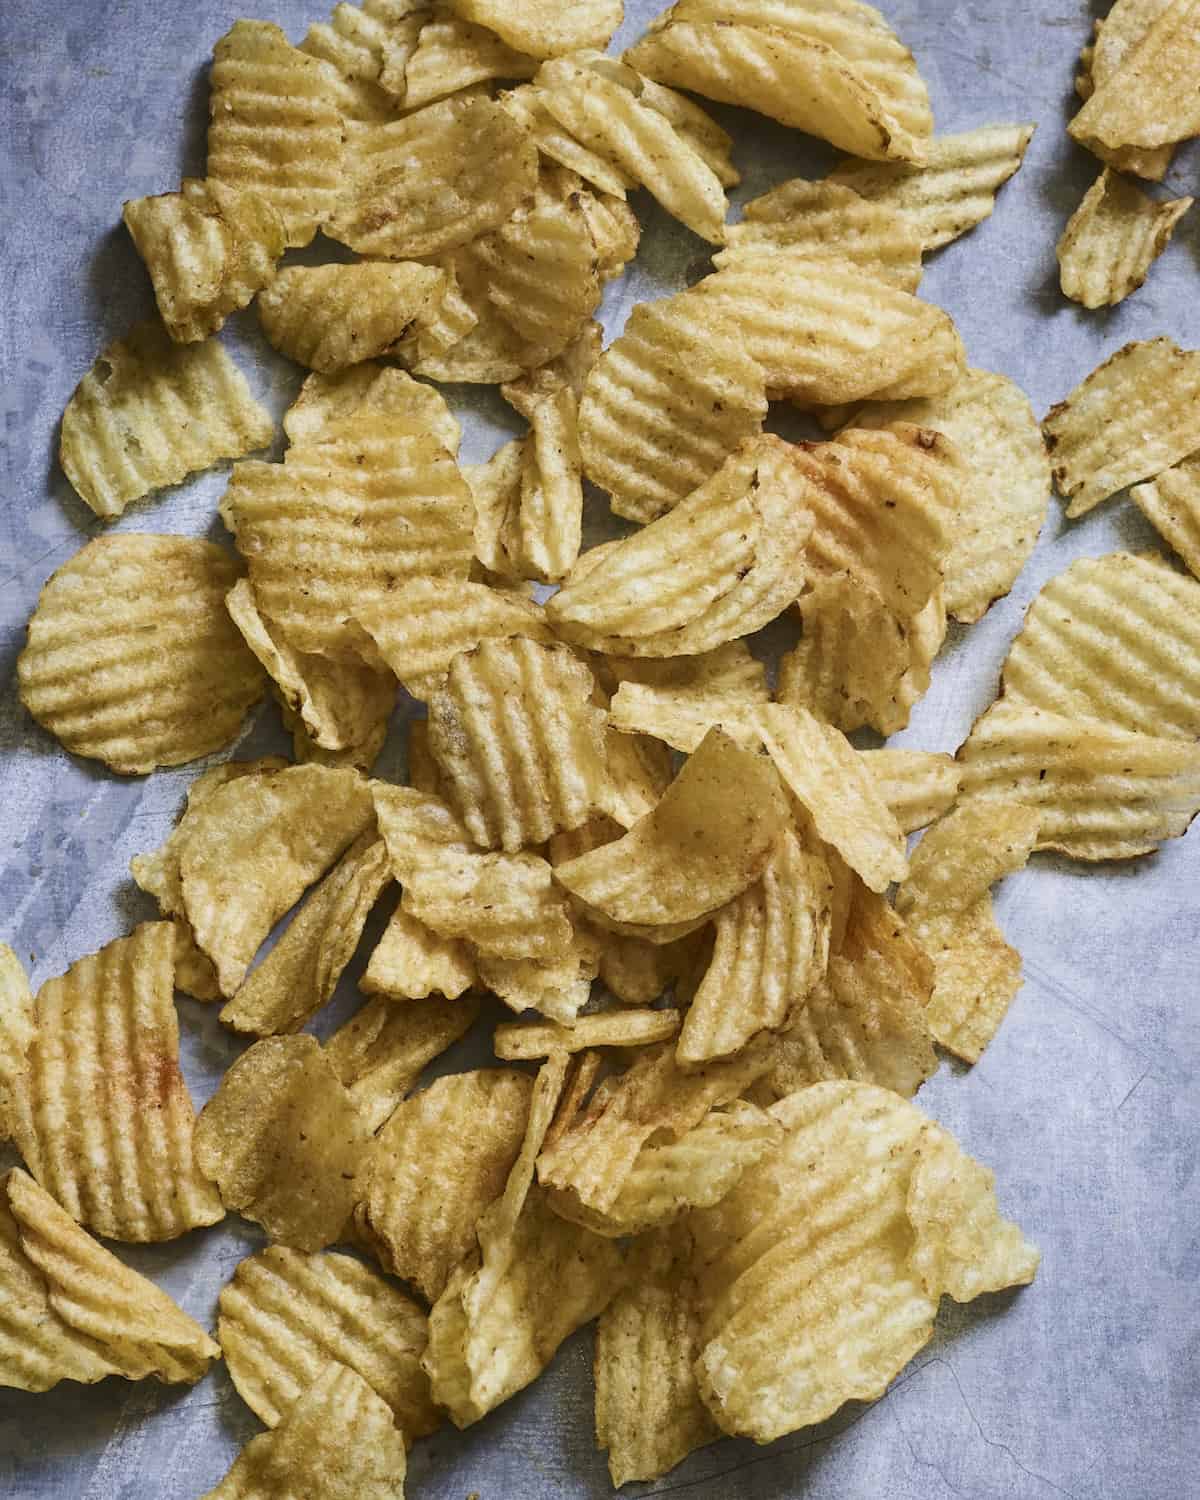 A close-up shot of wavy potato chips.